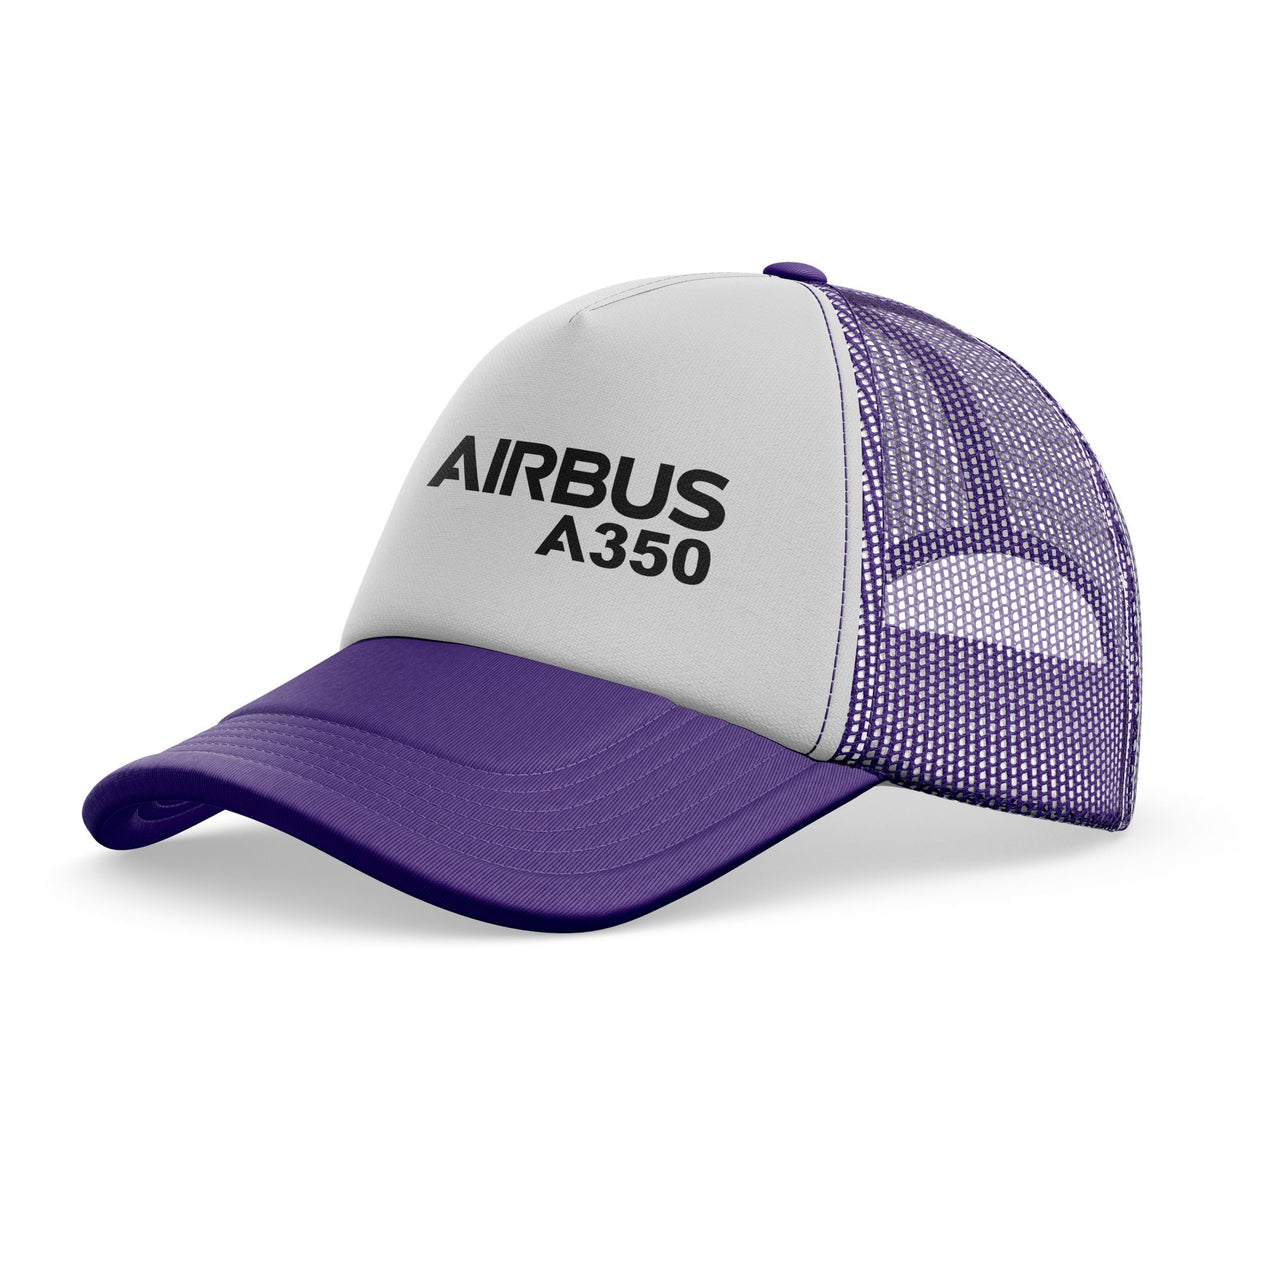 Airbus A350 & Text Designed Trucker Caps & Hats